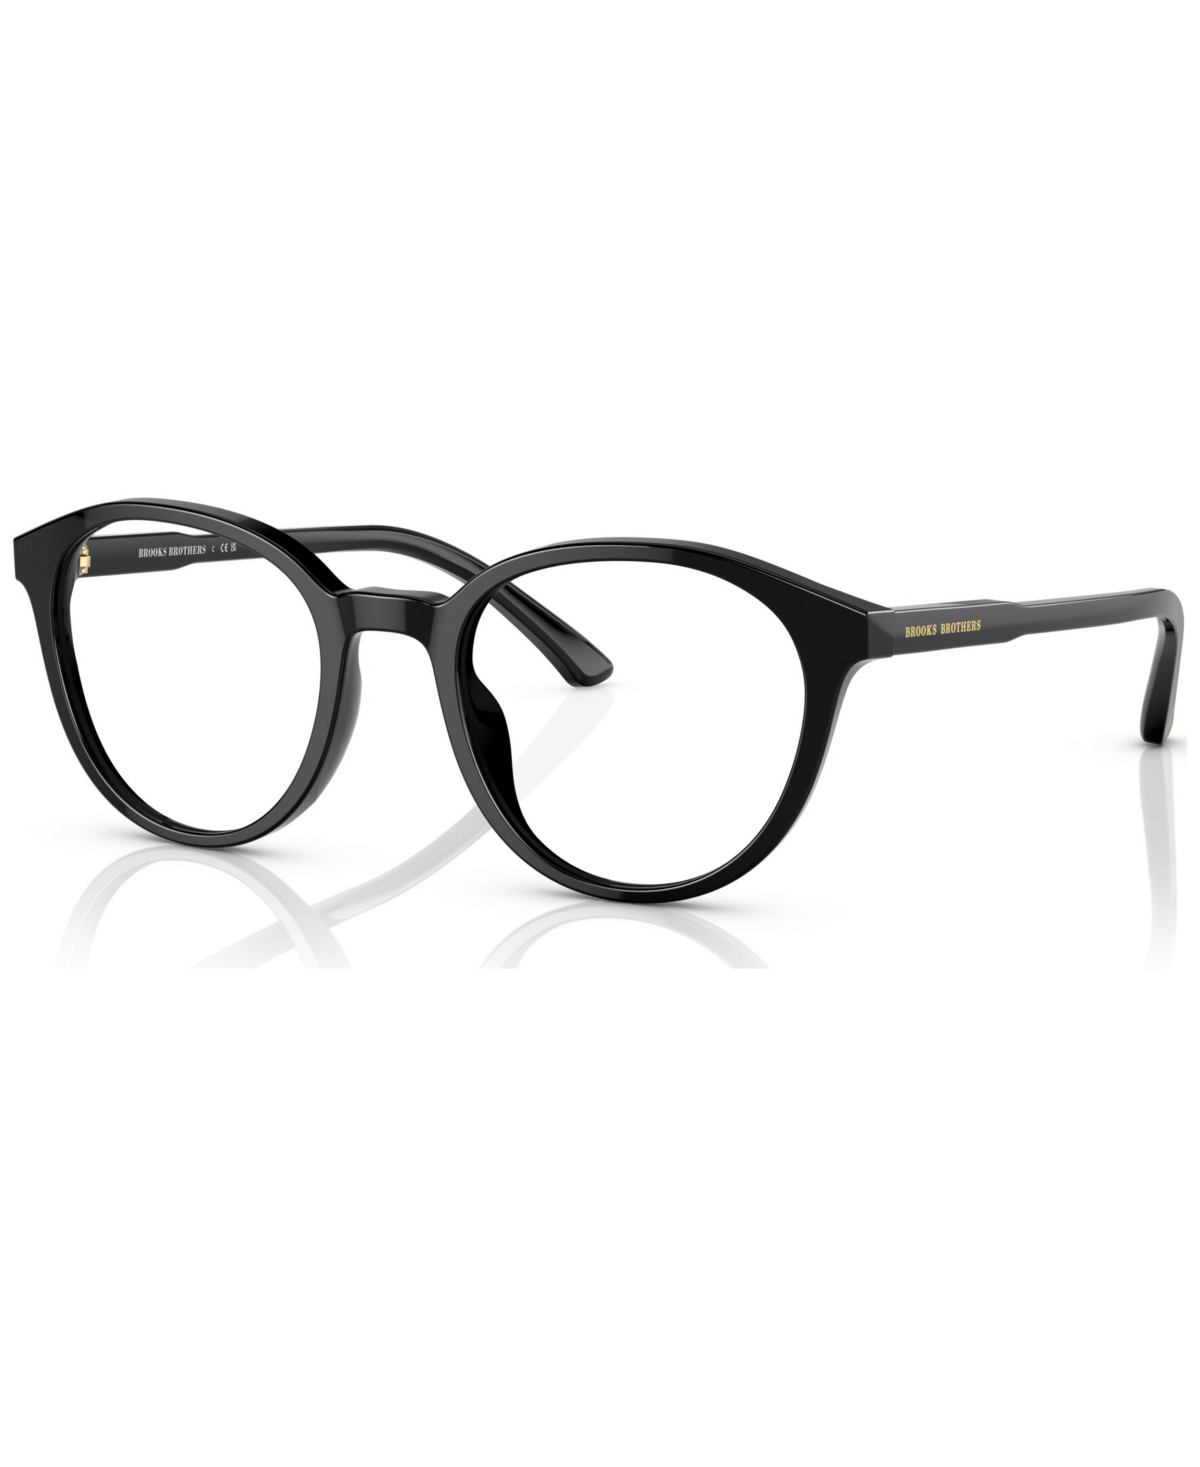 Men's Phantos Eyeglasses, BB205549-o - Black